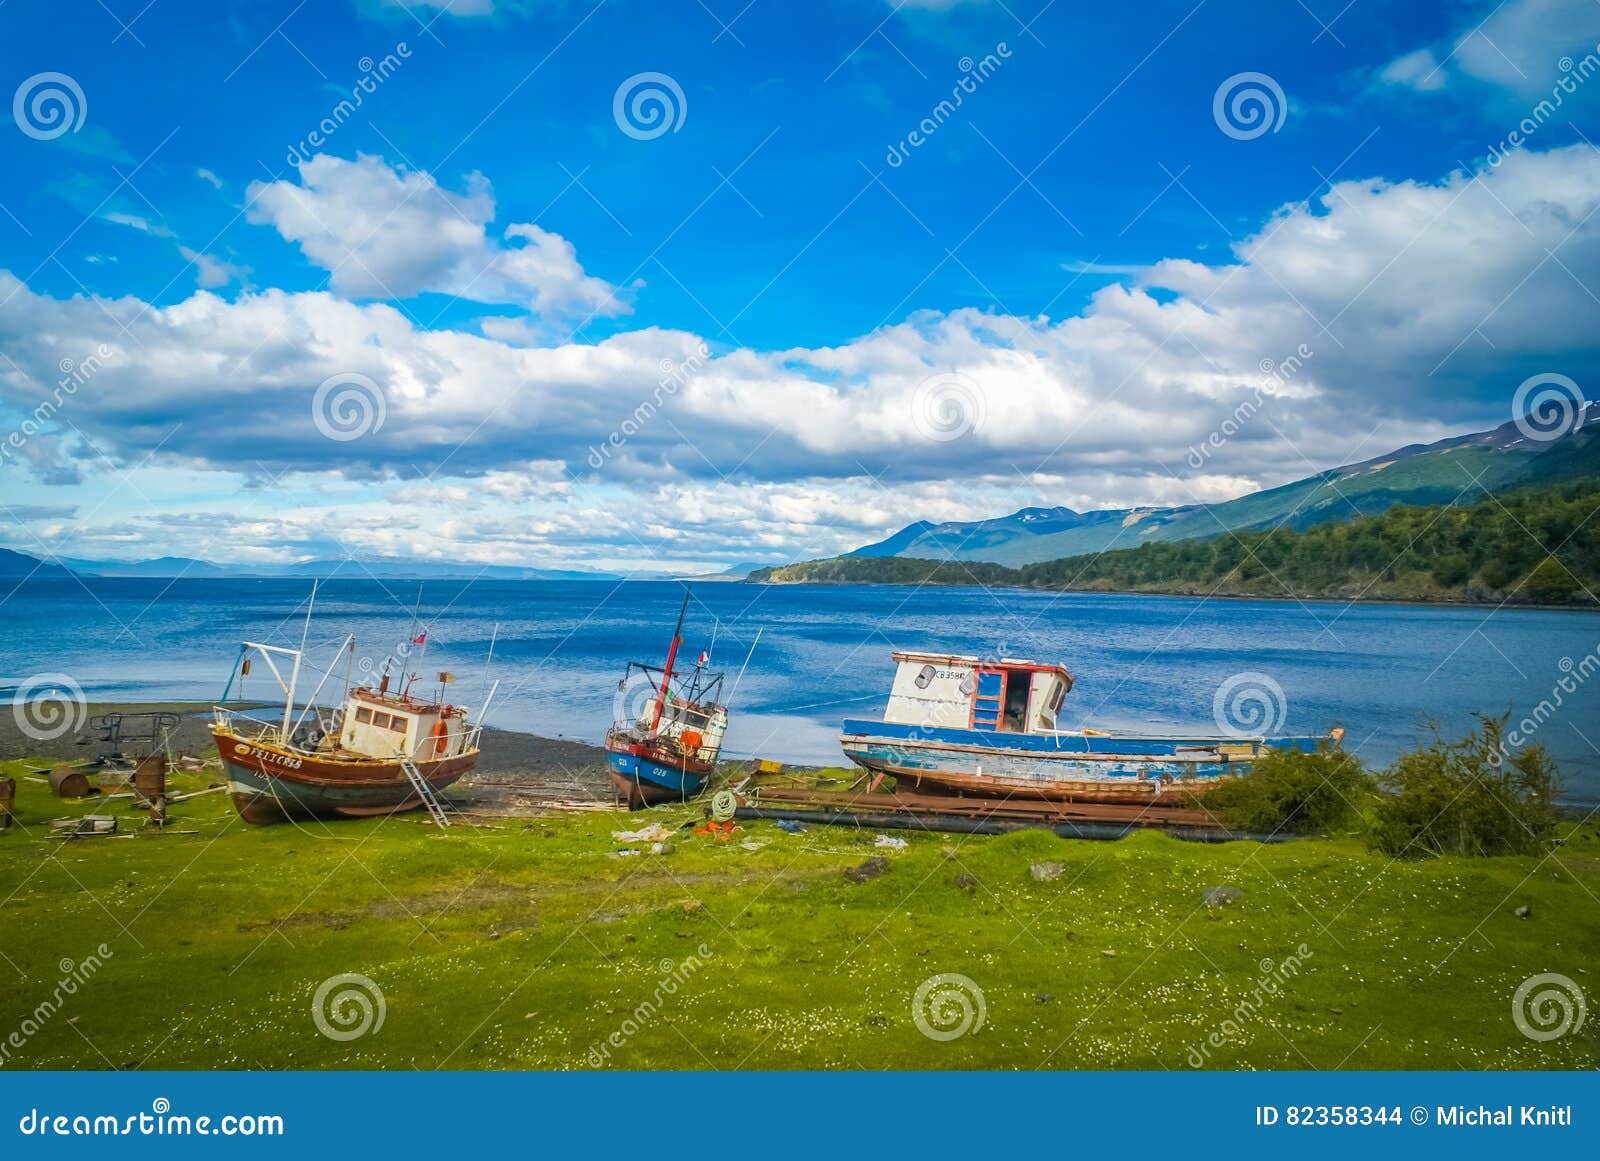 wooden boats on coast